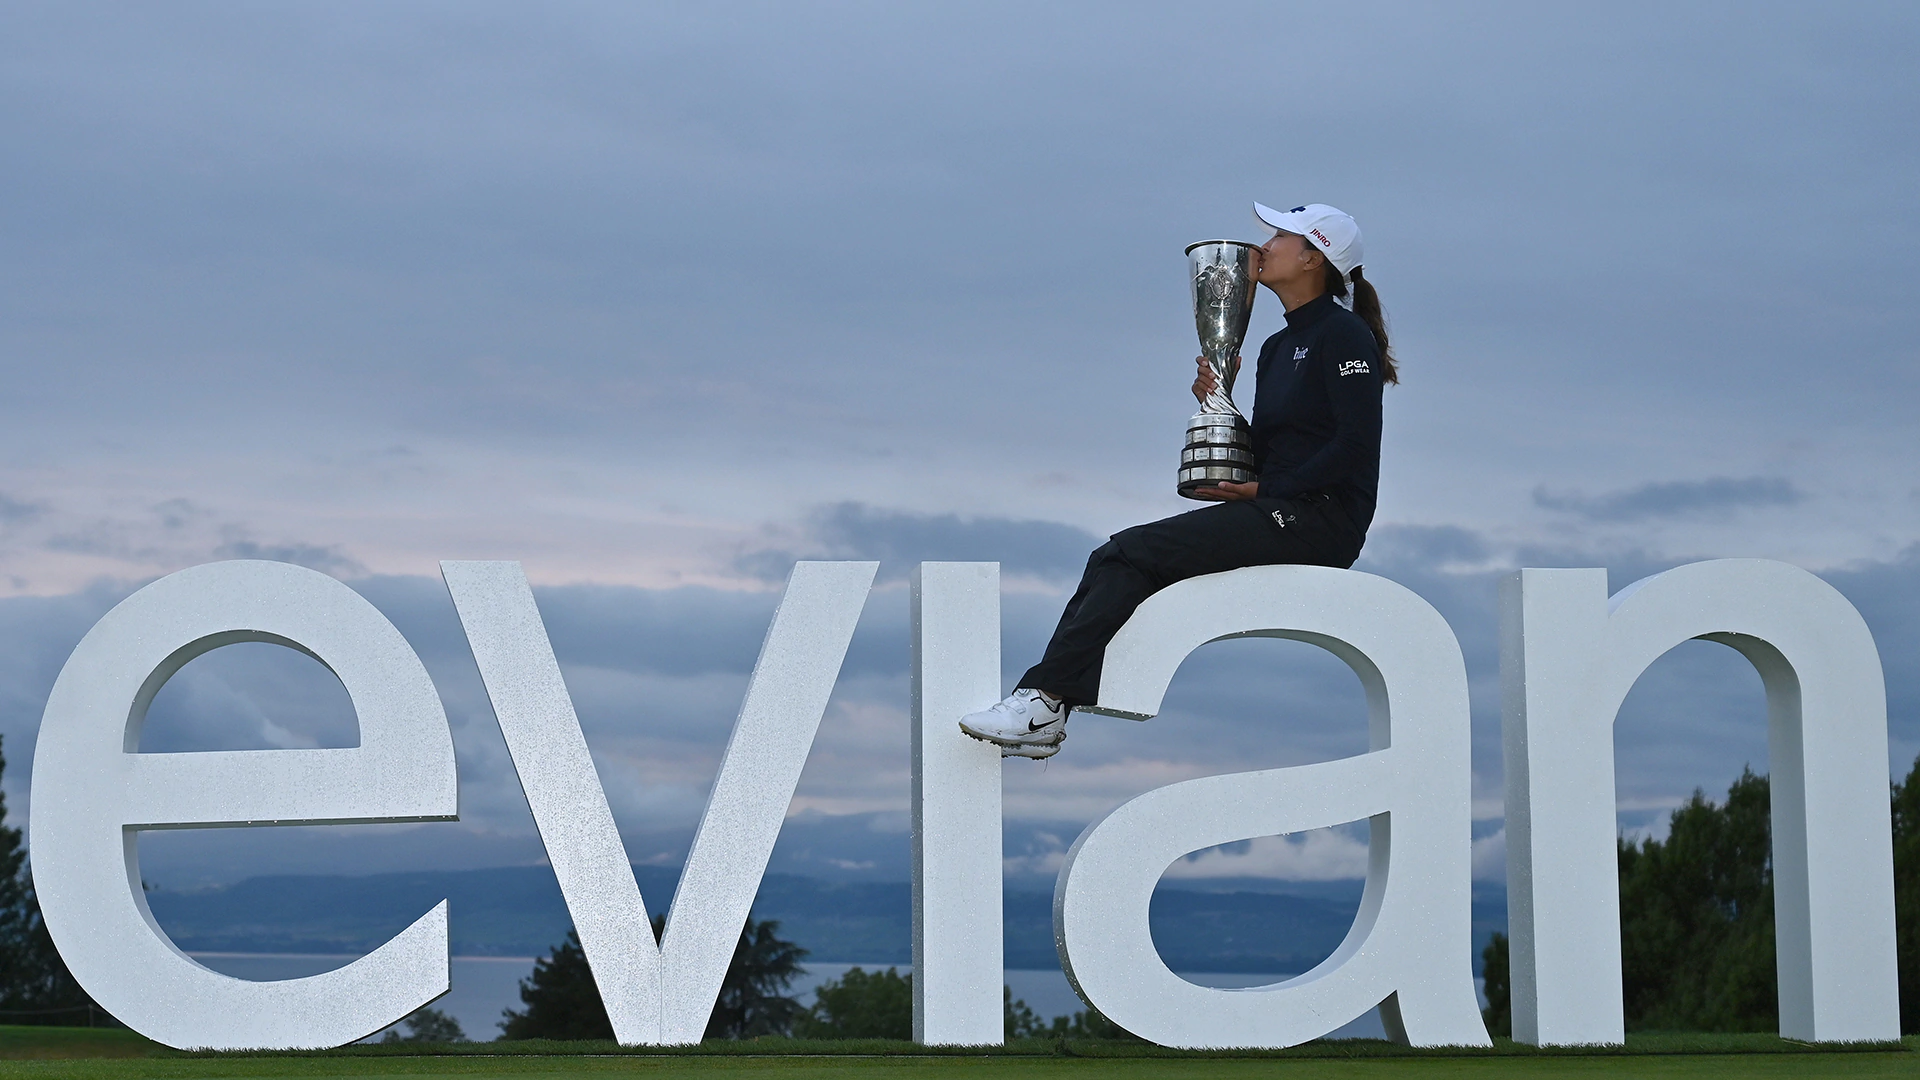 LPGA major Evian Championship canceled because of travel concerns